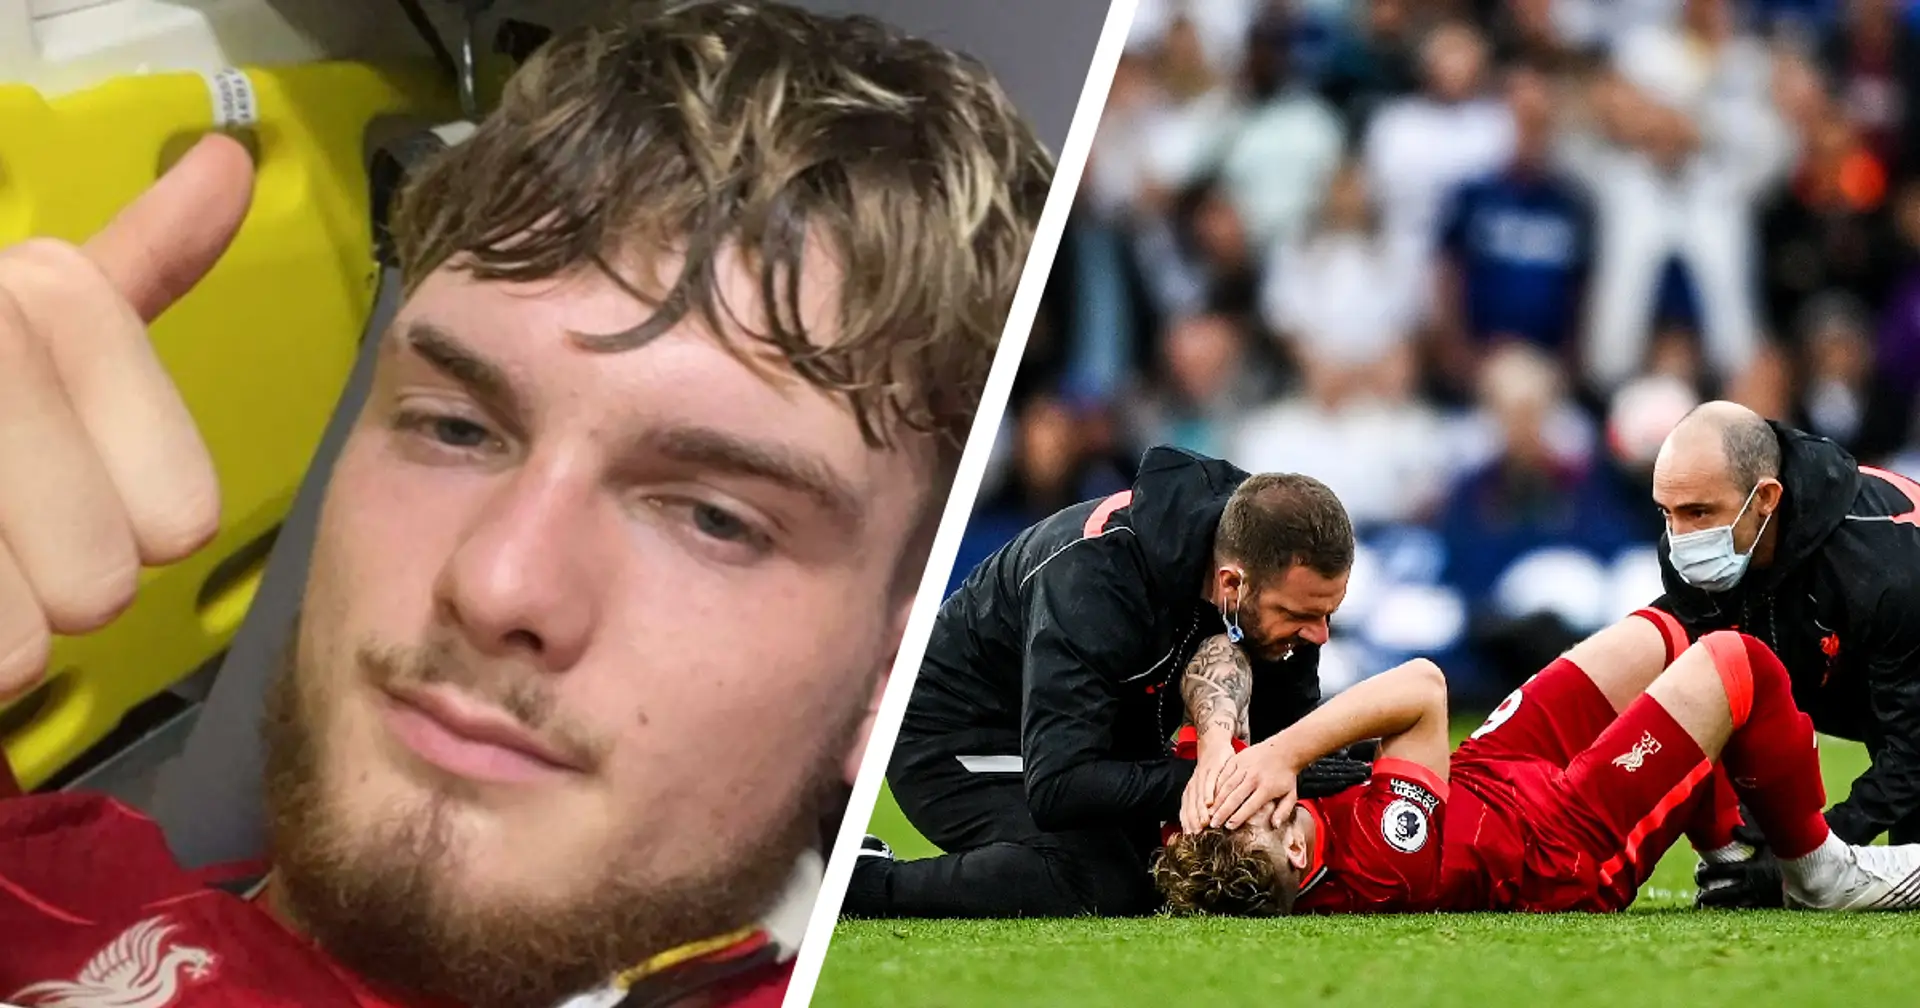 Elliott shares positive Instagram message after horrific injury during Leeds clash